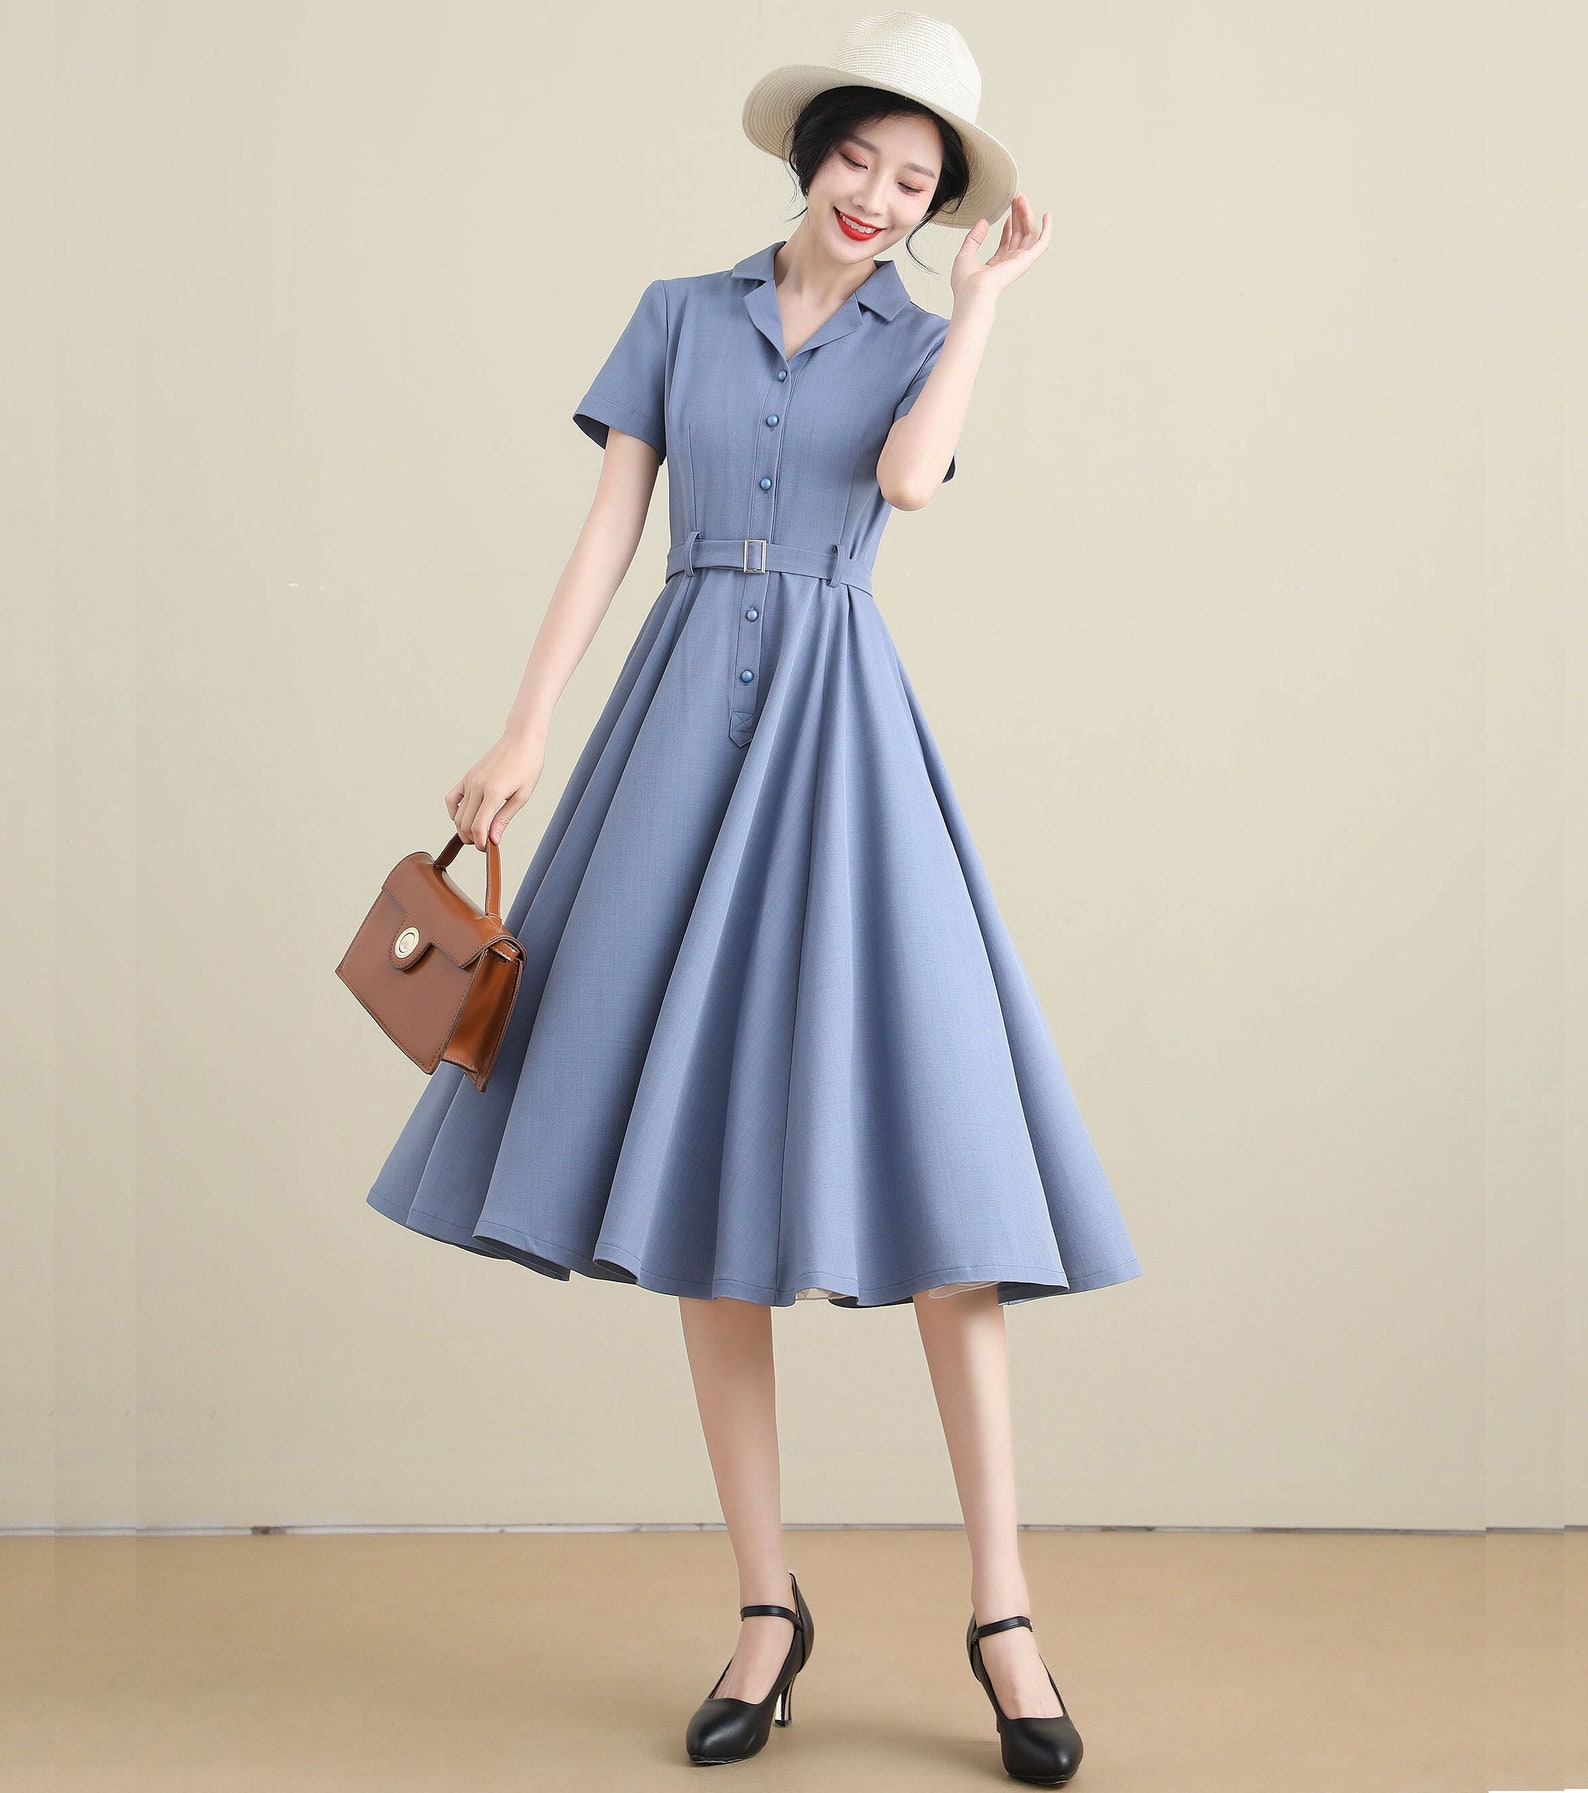 Vintage Inspired Linen Dress Women Short Sleeve Shirtwaist - Etsy